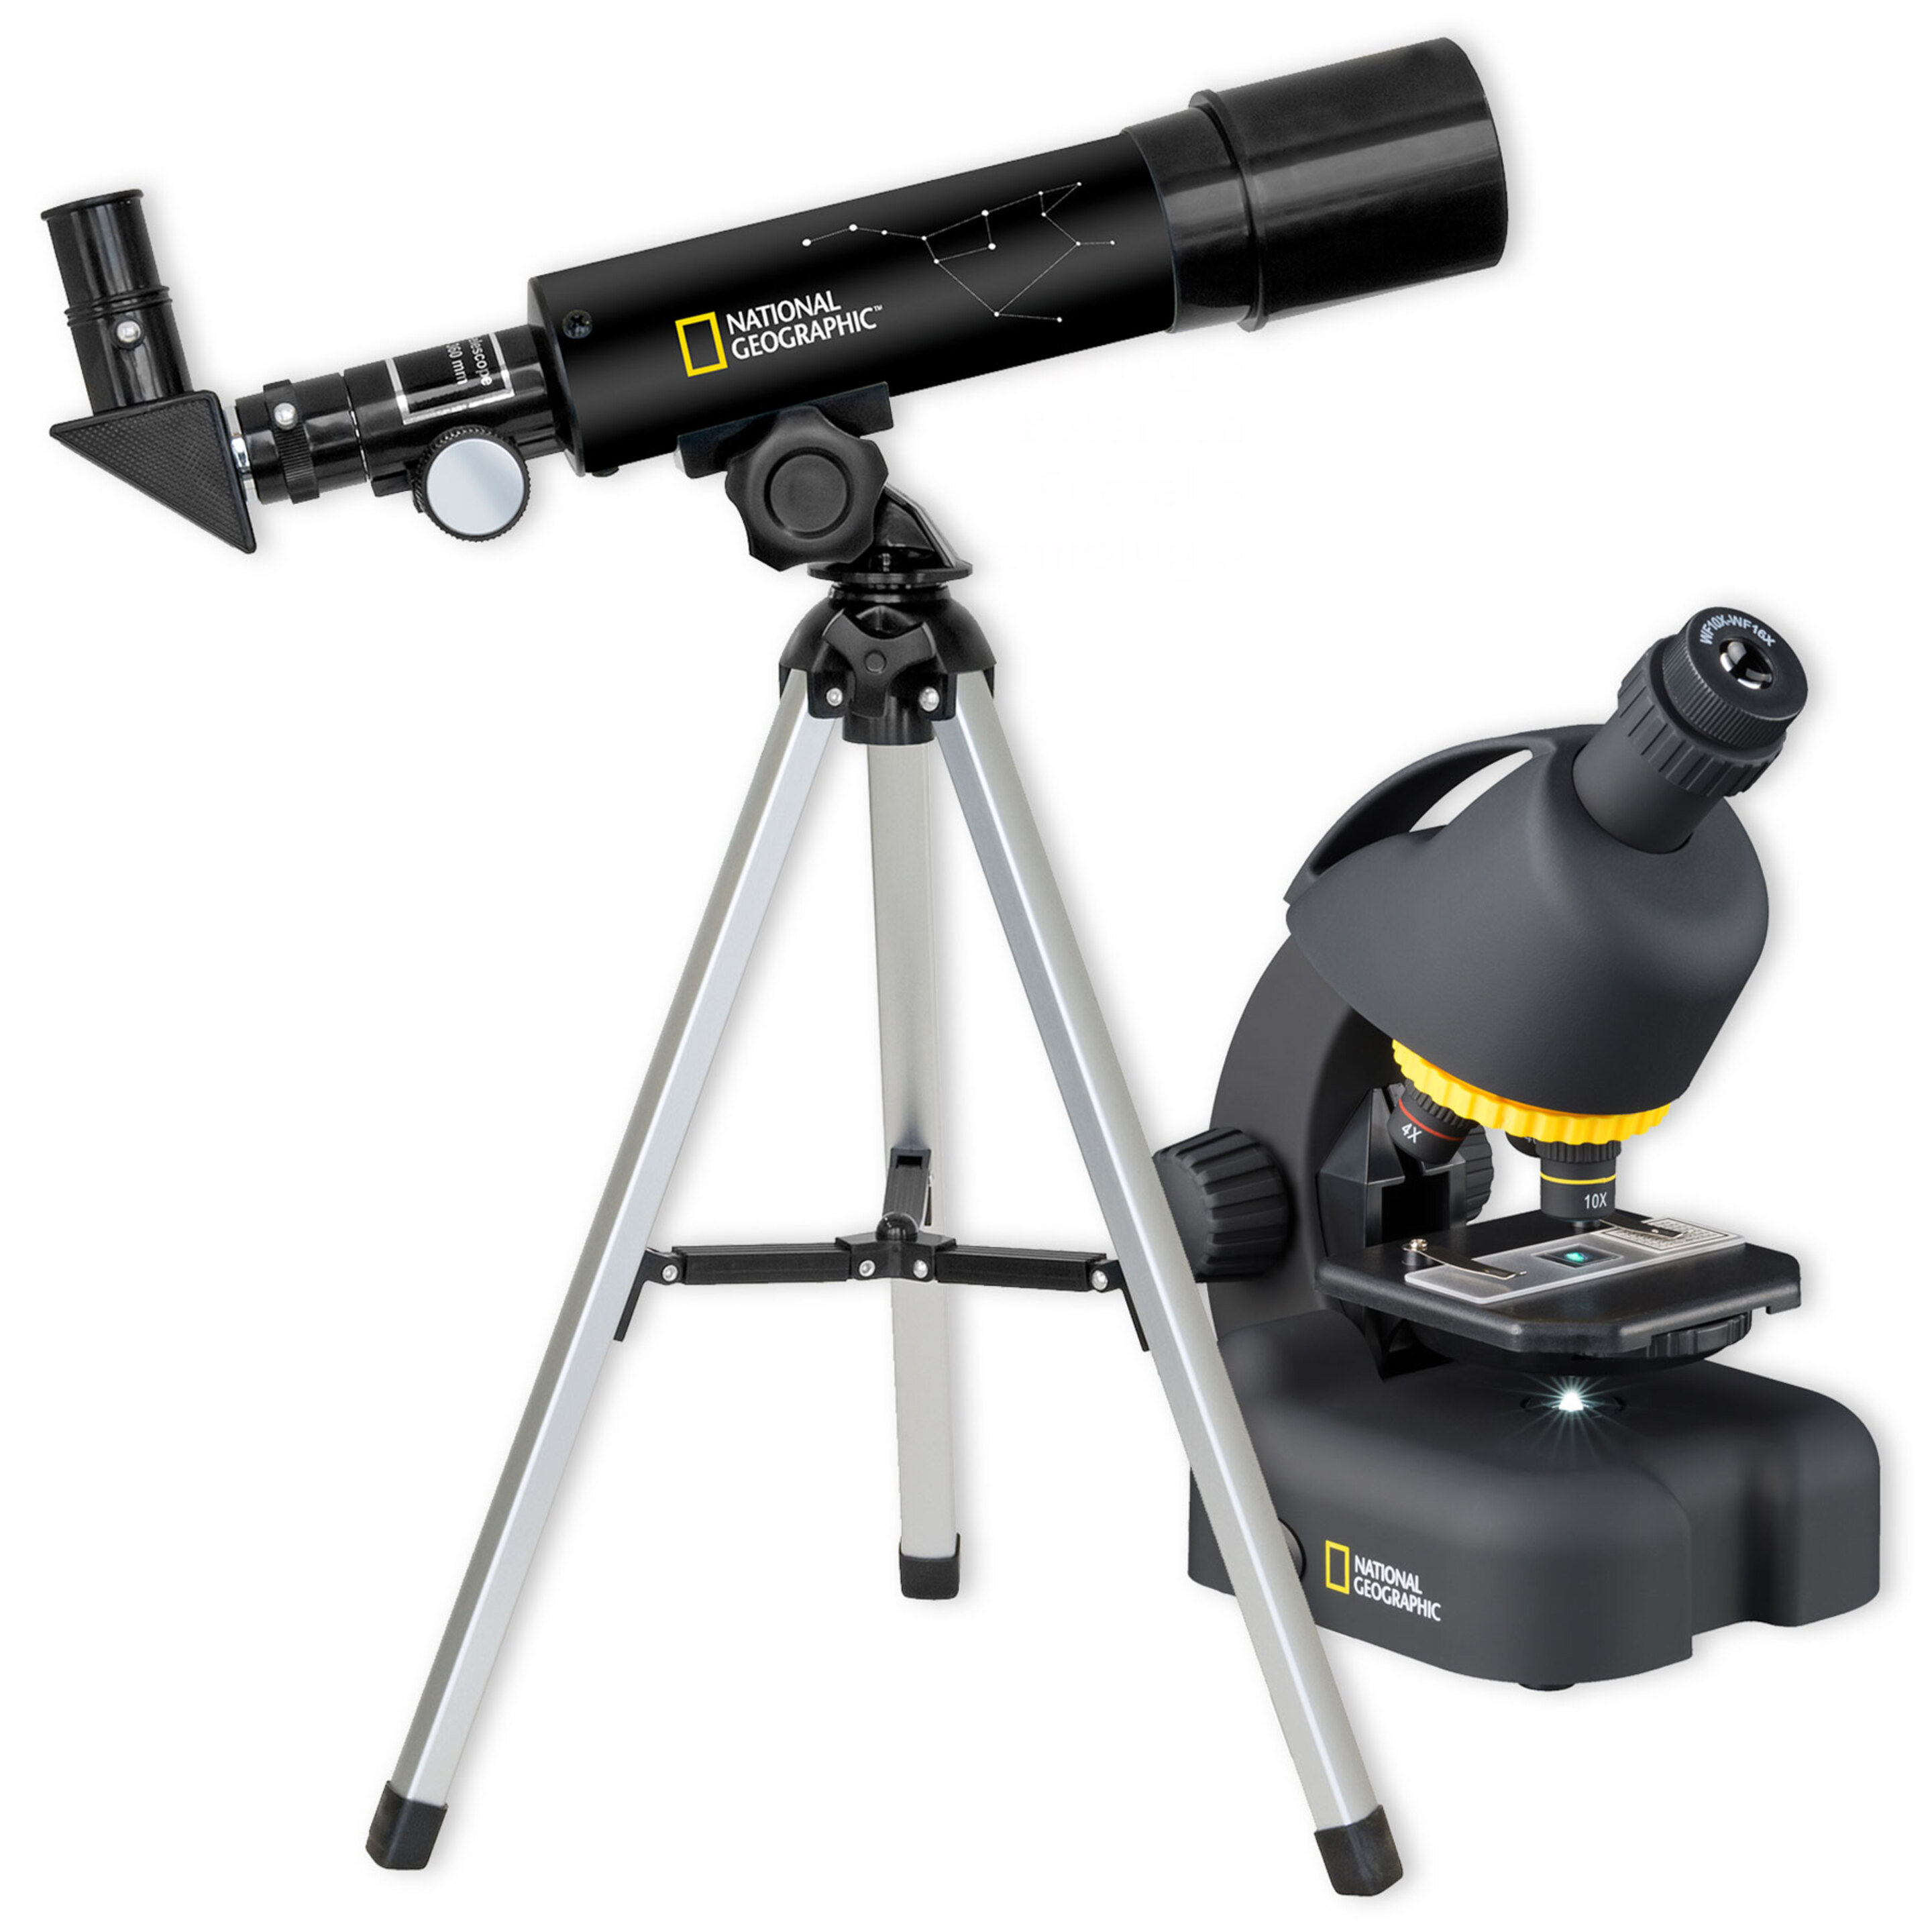 Set De Telescopio + Microscopio Para Niños National Geographic + Accesorios - negro-amarillo - 